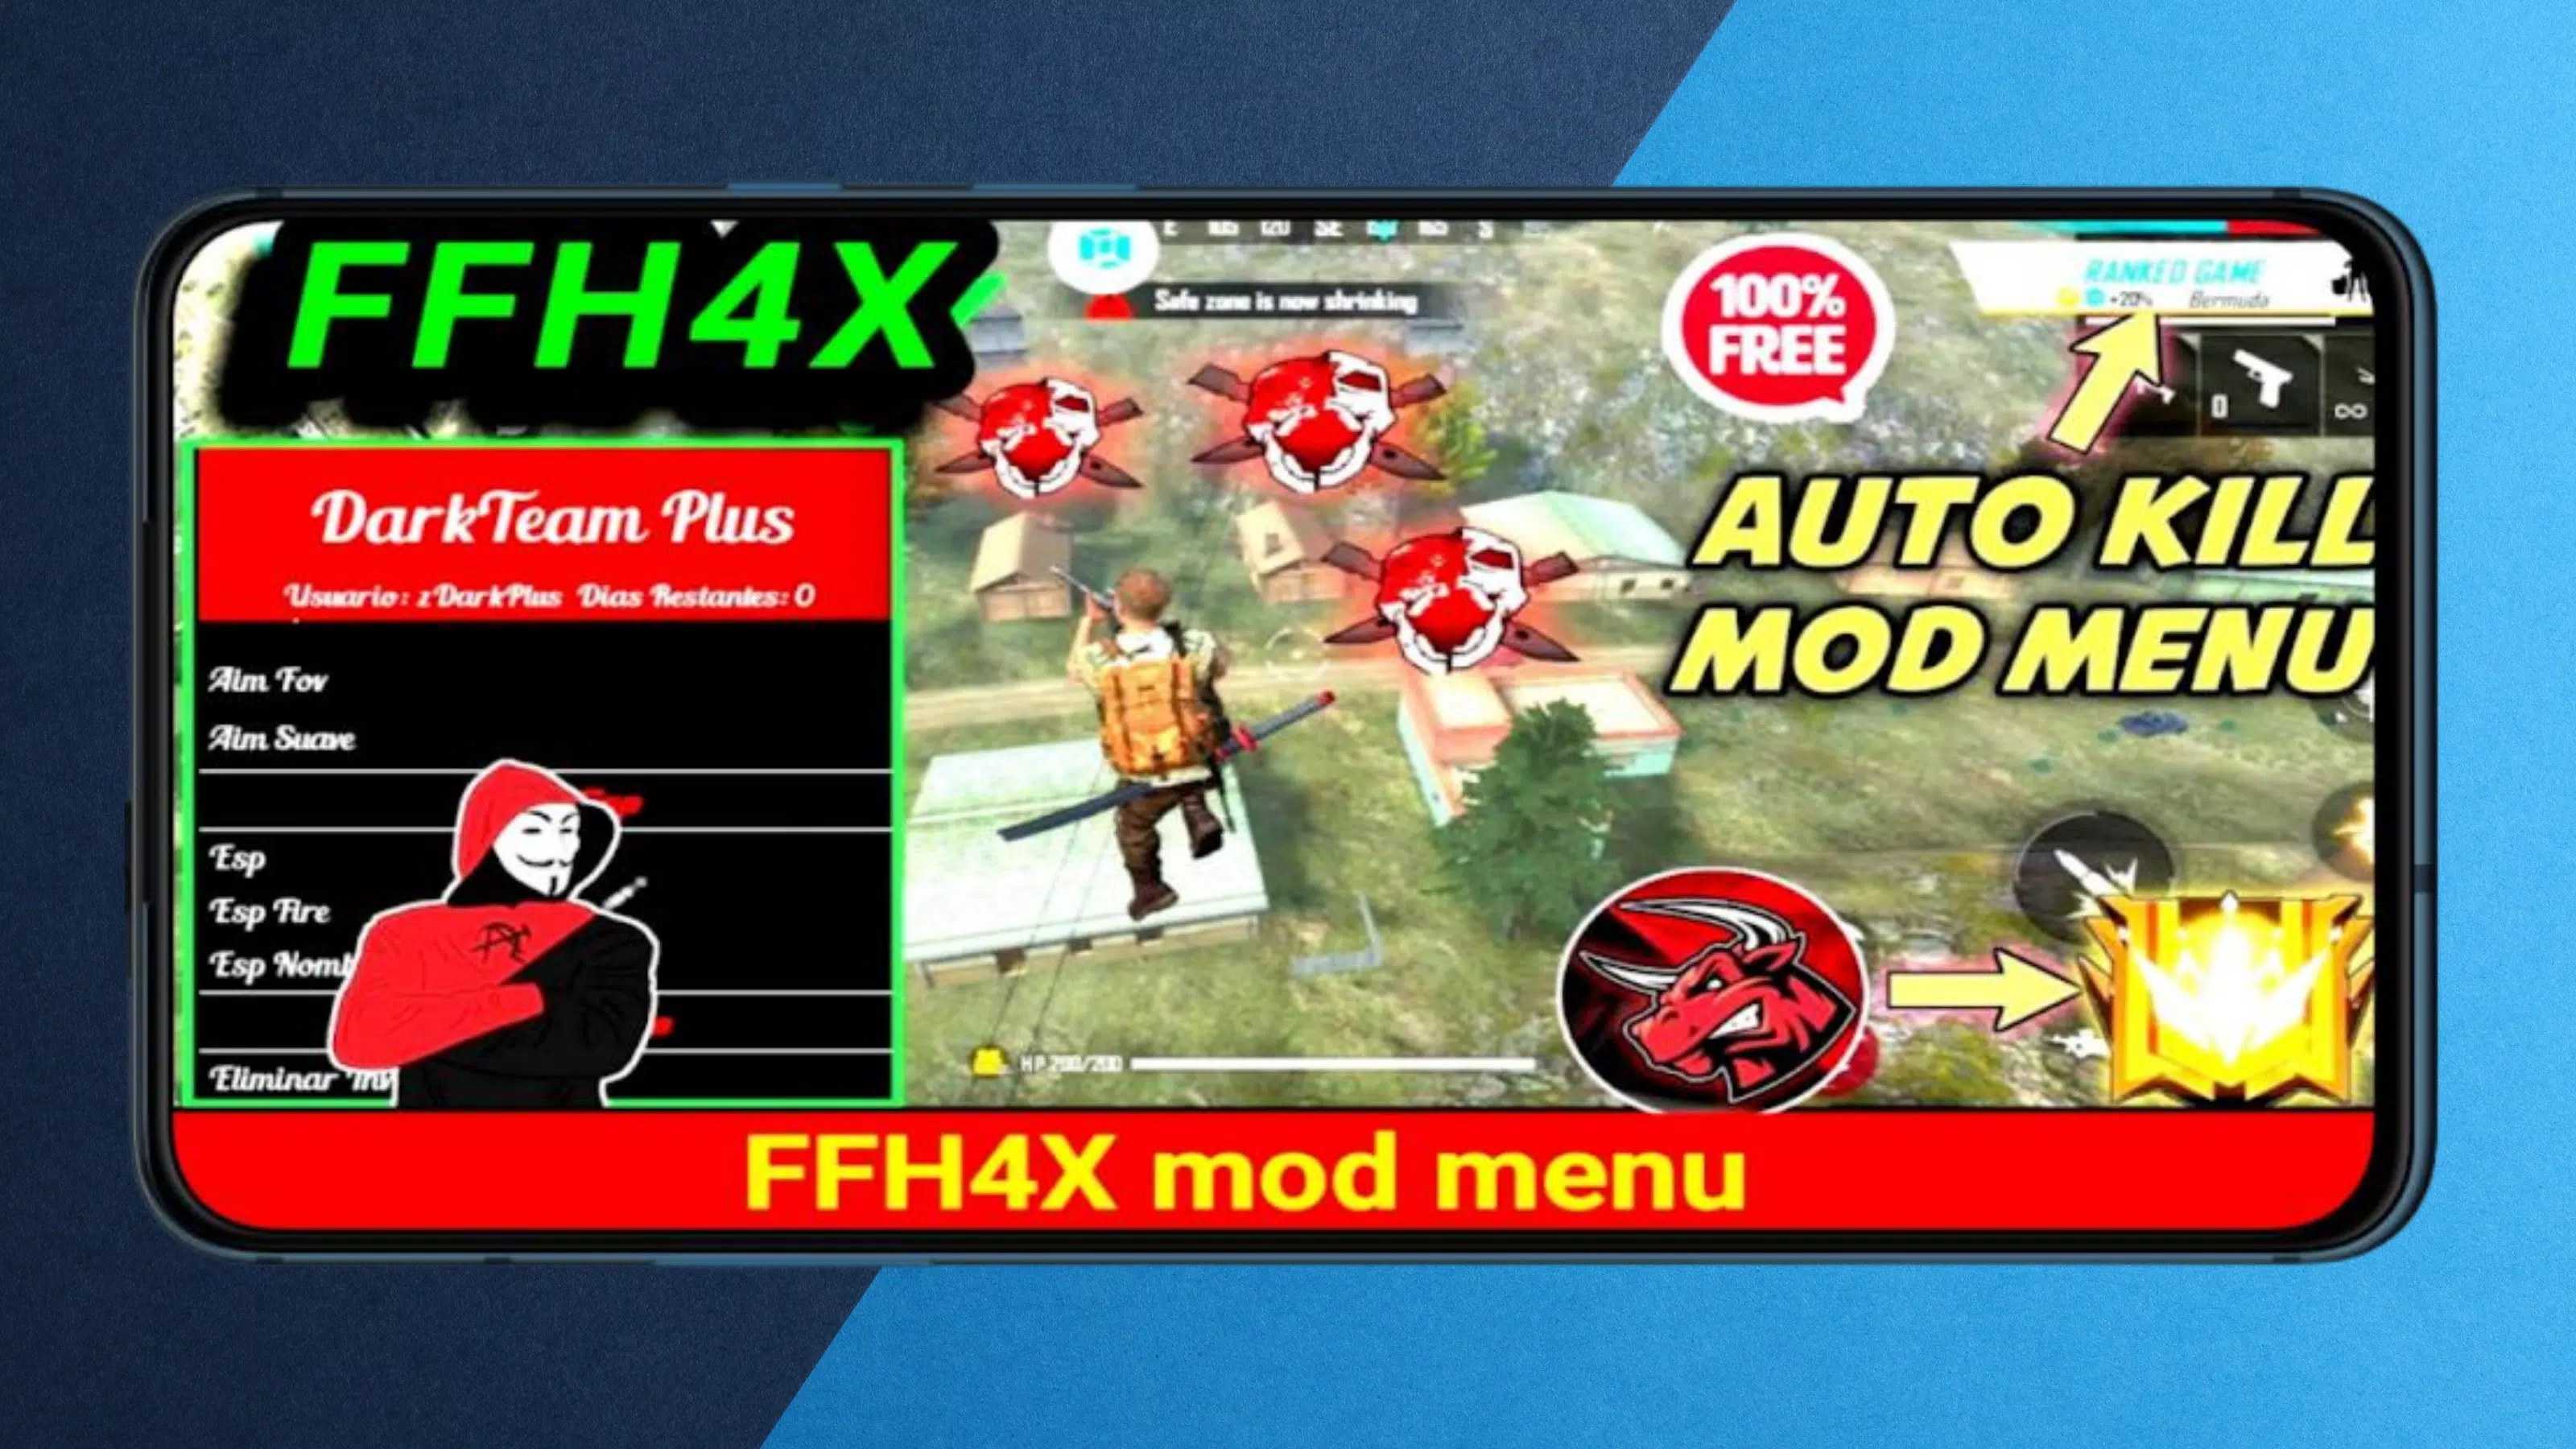 ffh4x mod menu ff hack APK for Android Download